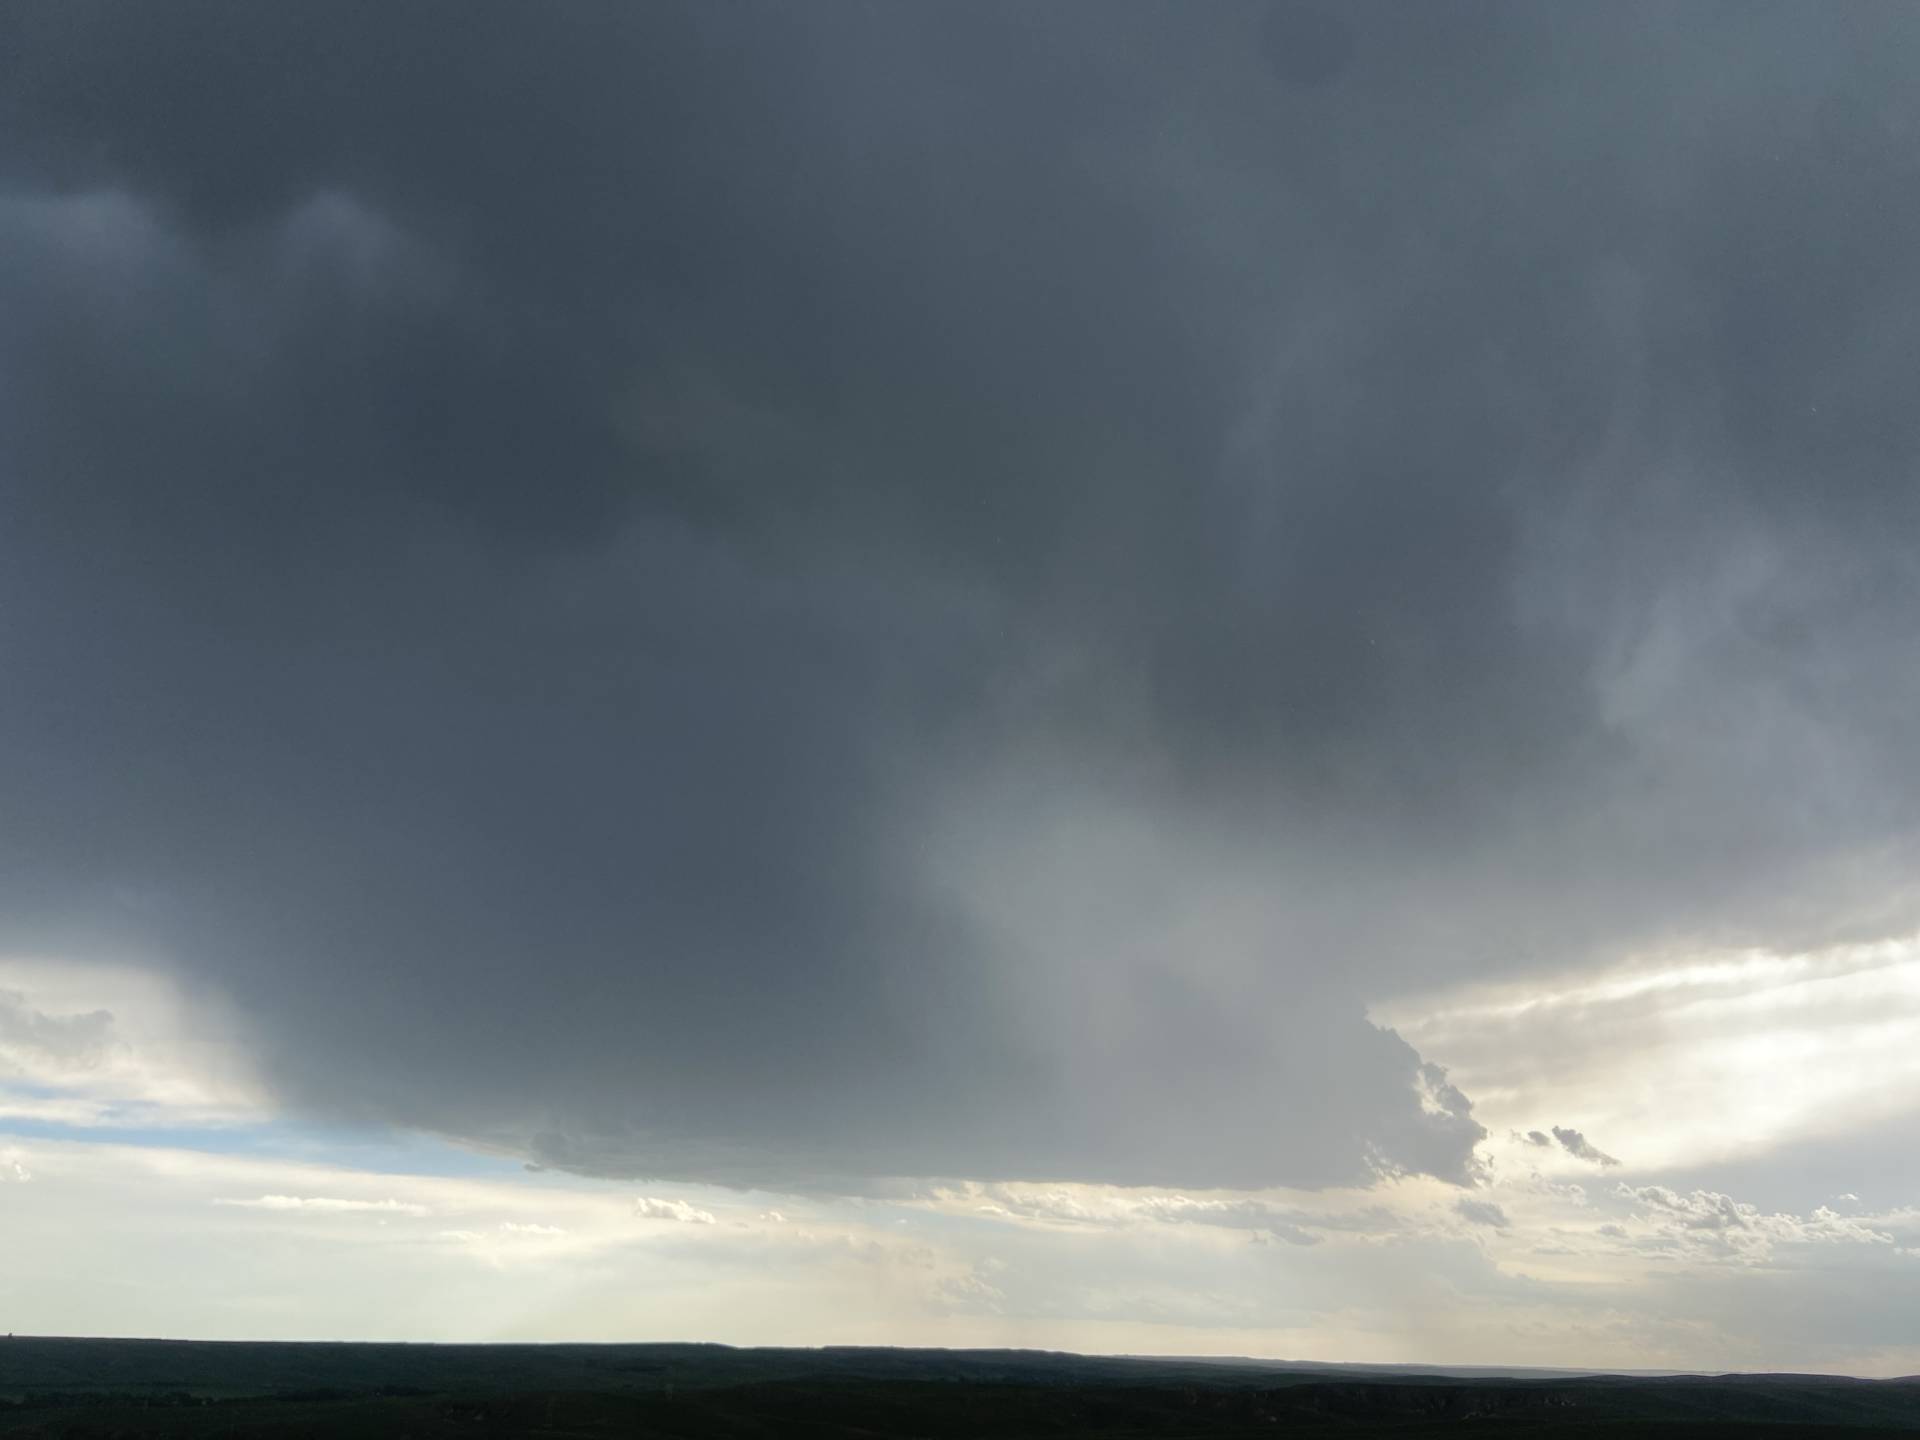 Supercell over the Little Grand Canton Wauneta, NE 05:42 PM